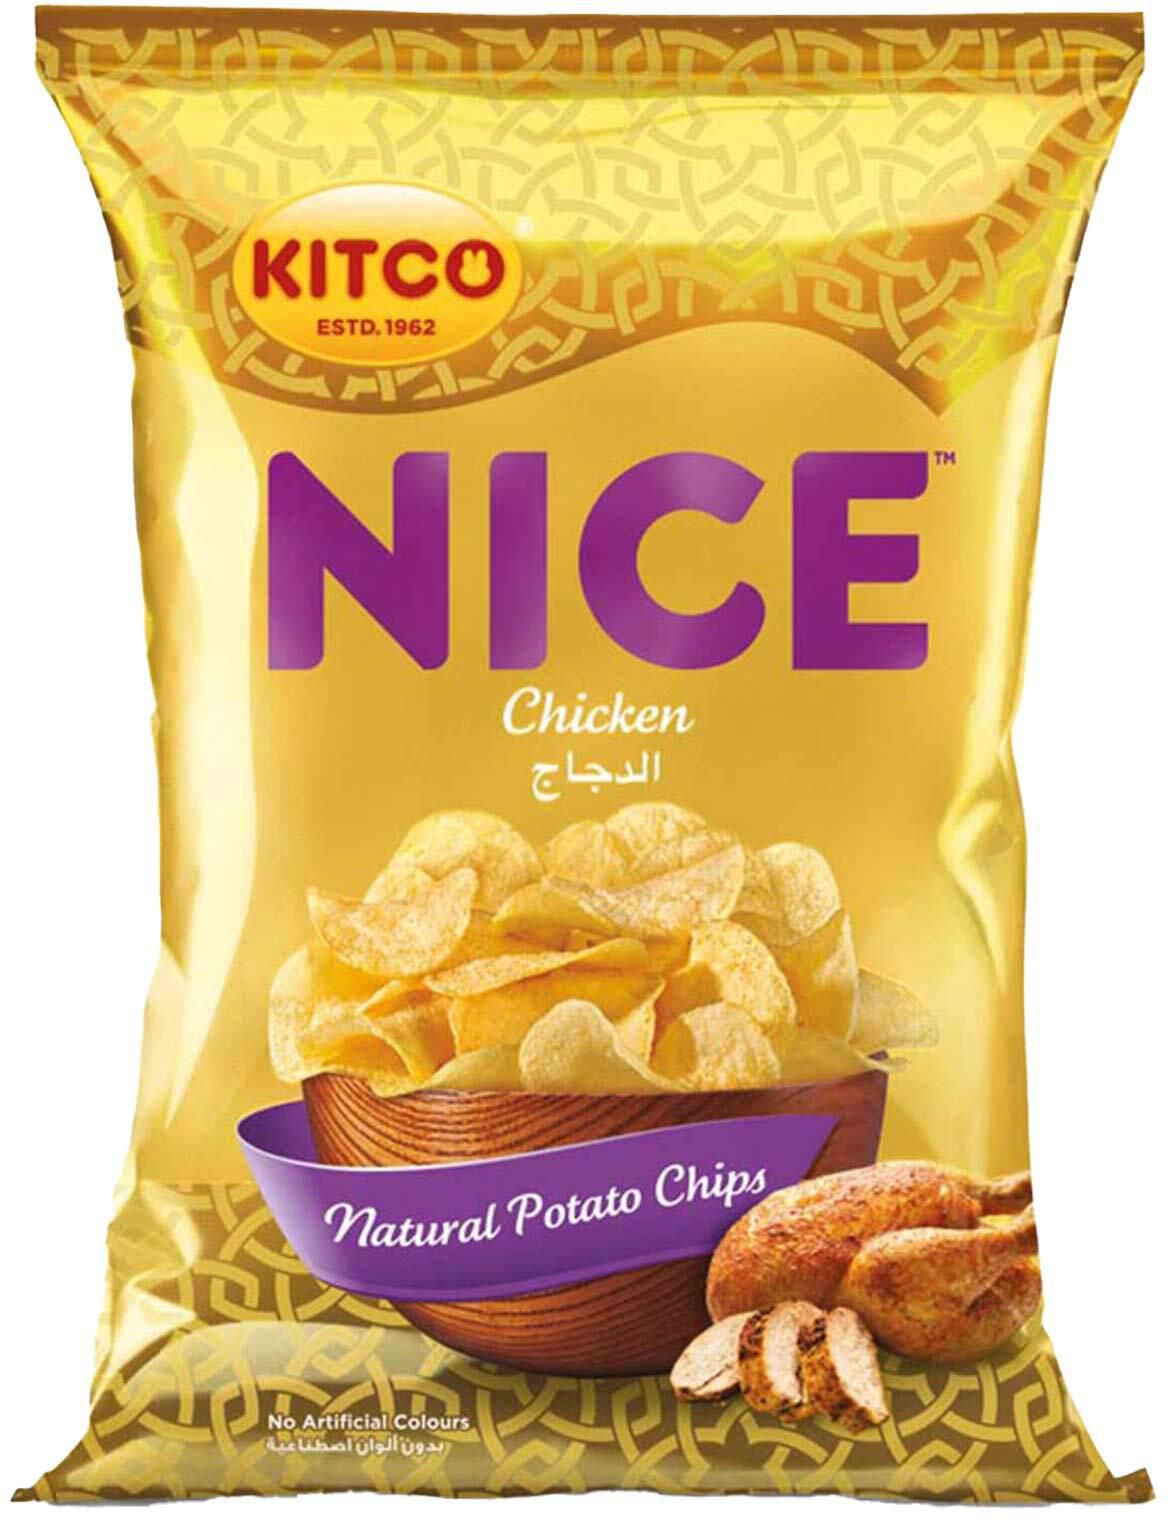 Kitco, potato chips, chicken flavor 21g